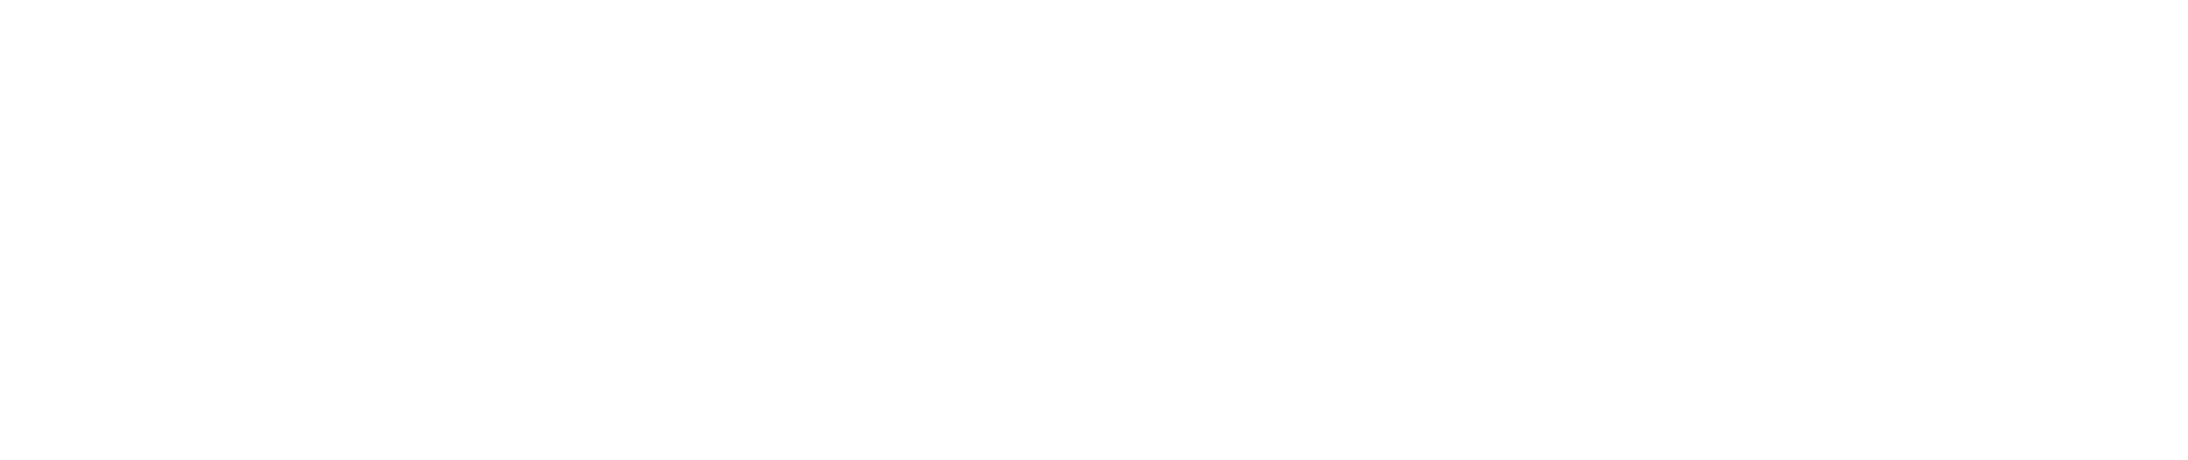 Green Effects